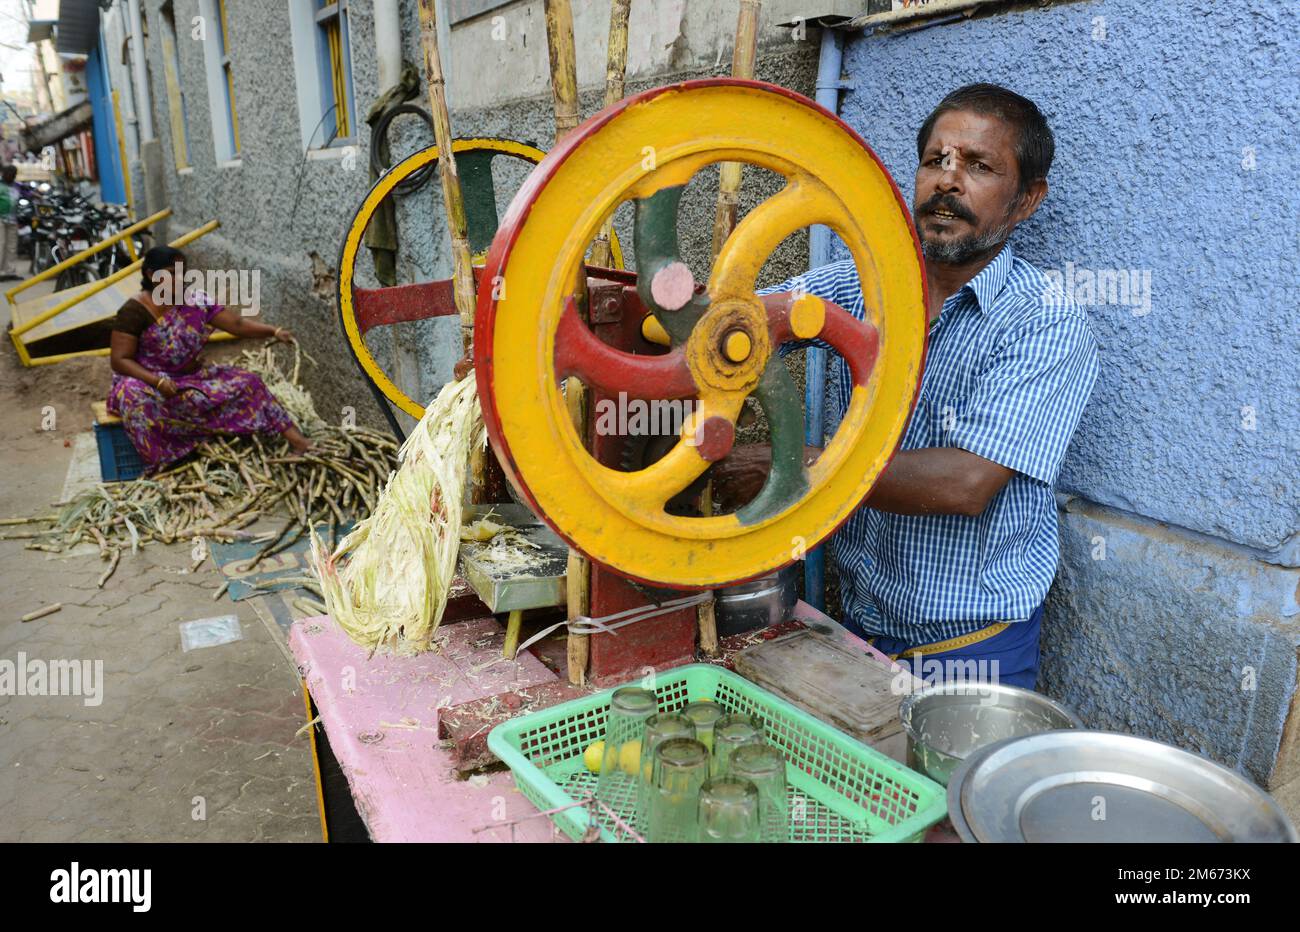 A Sugarcane juice stall in Madurai, Tamil Nadu, India. Stock Photo